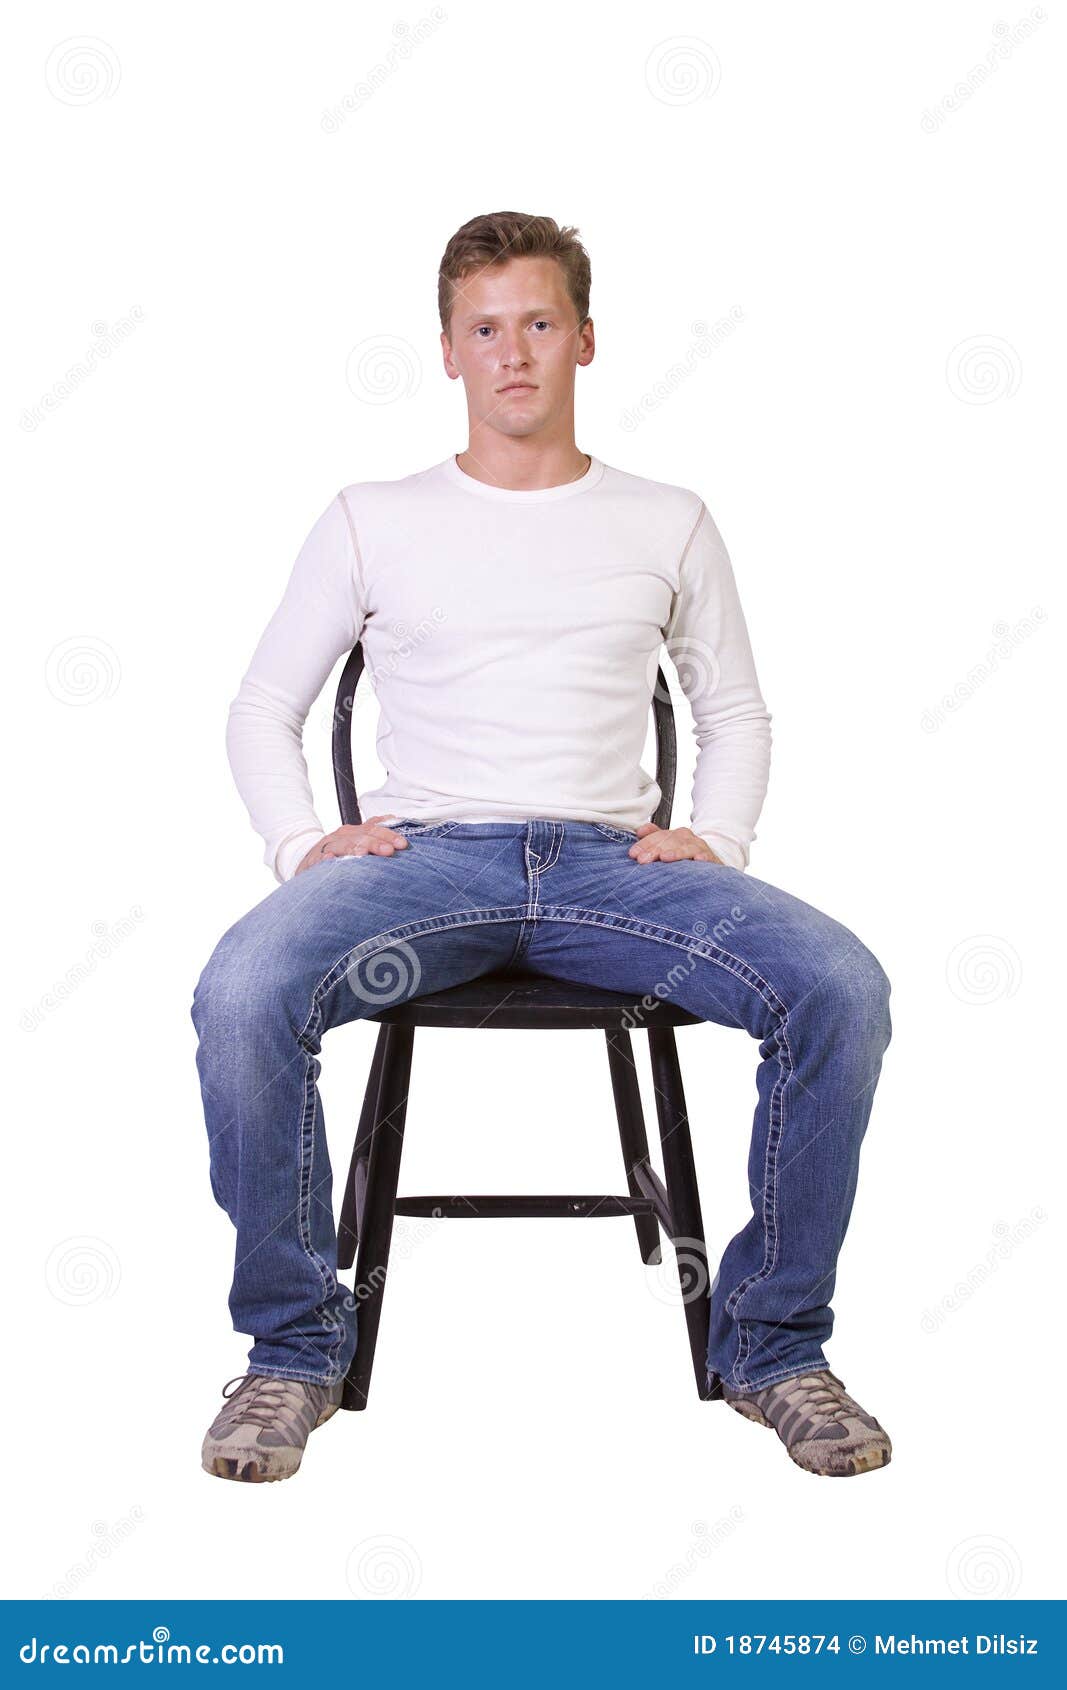 Мужчина сидит расставив ноги